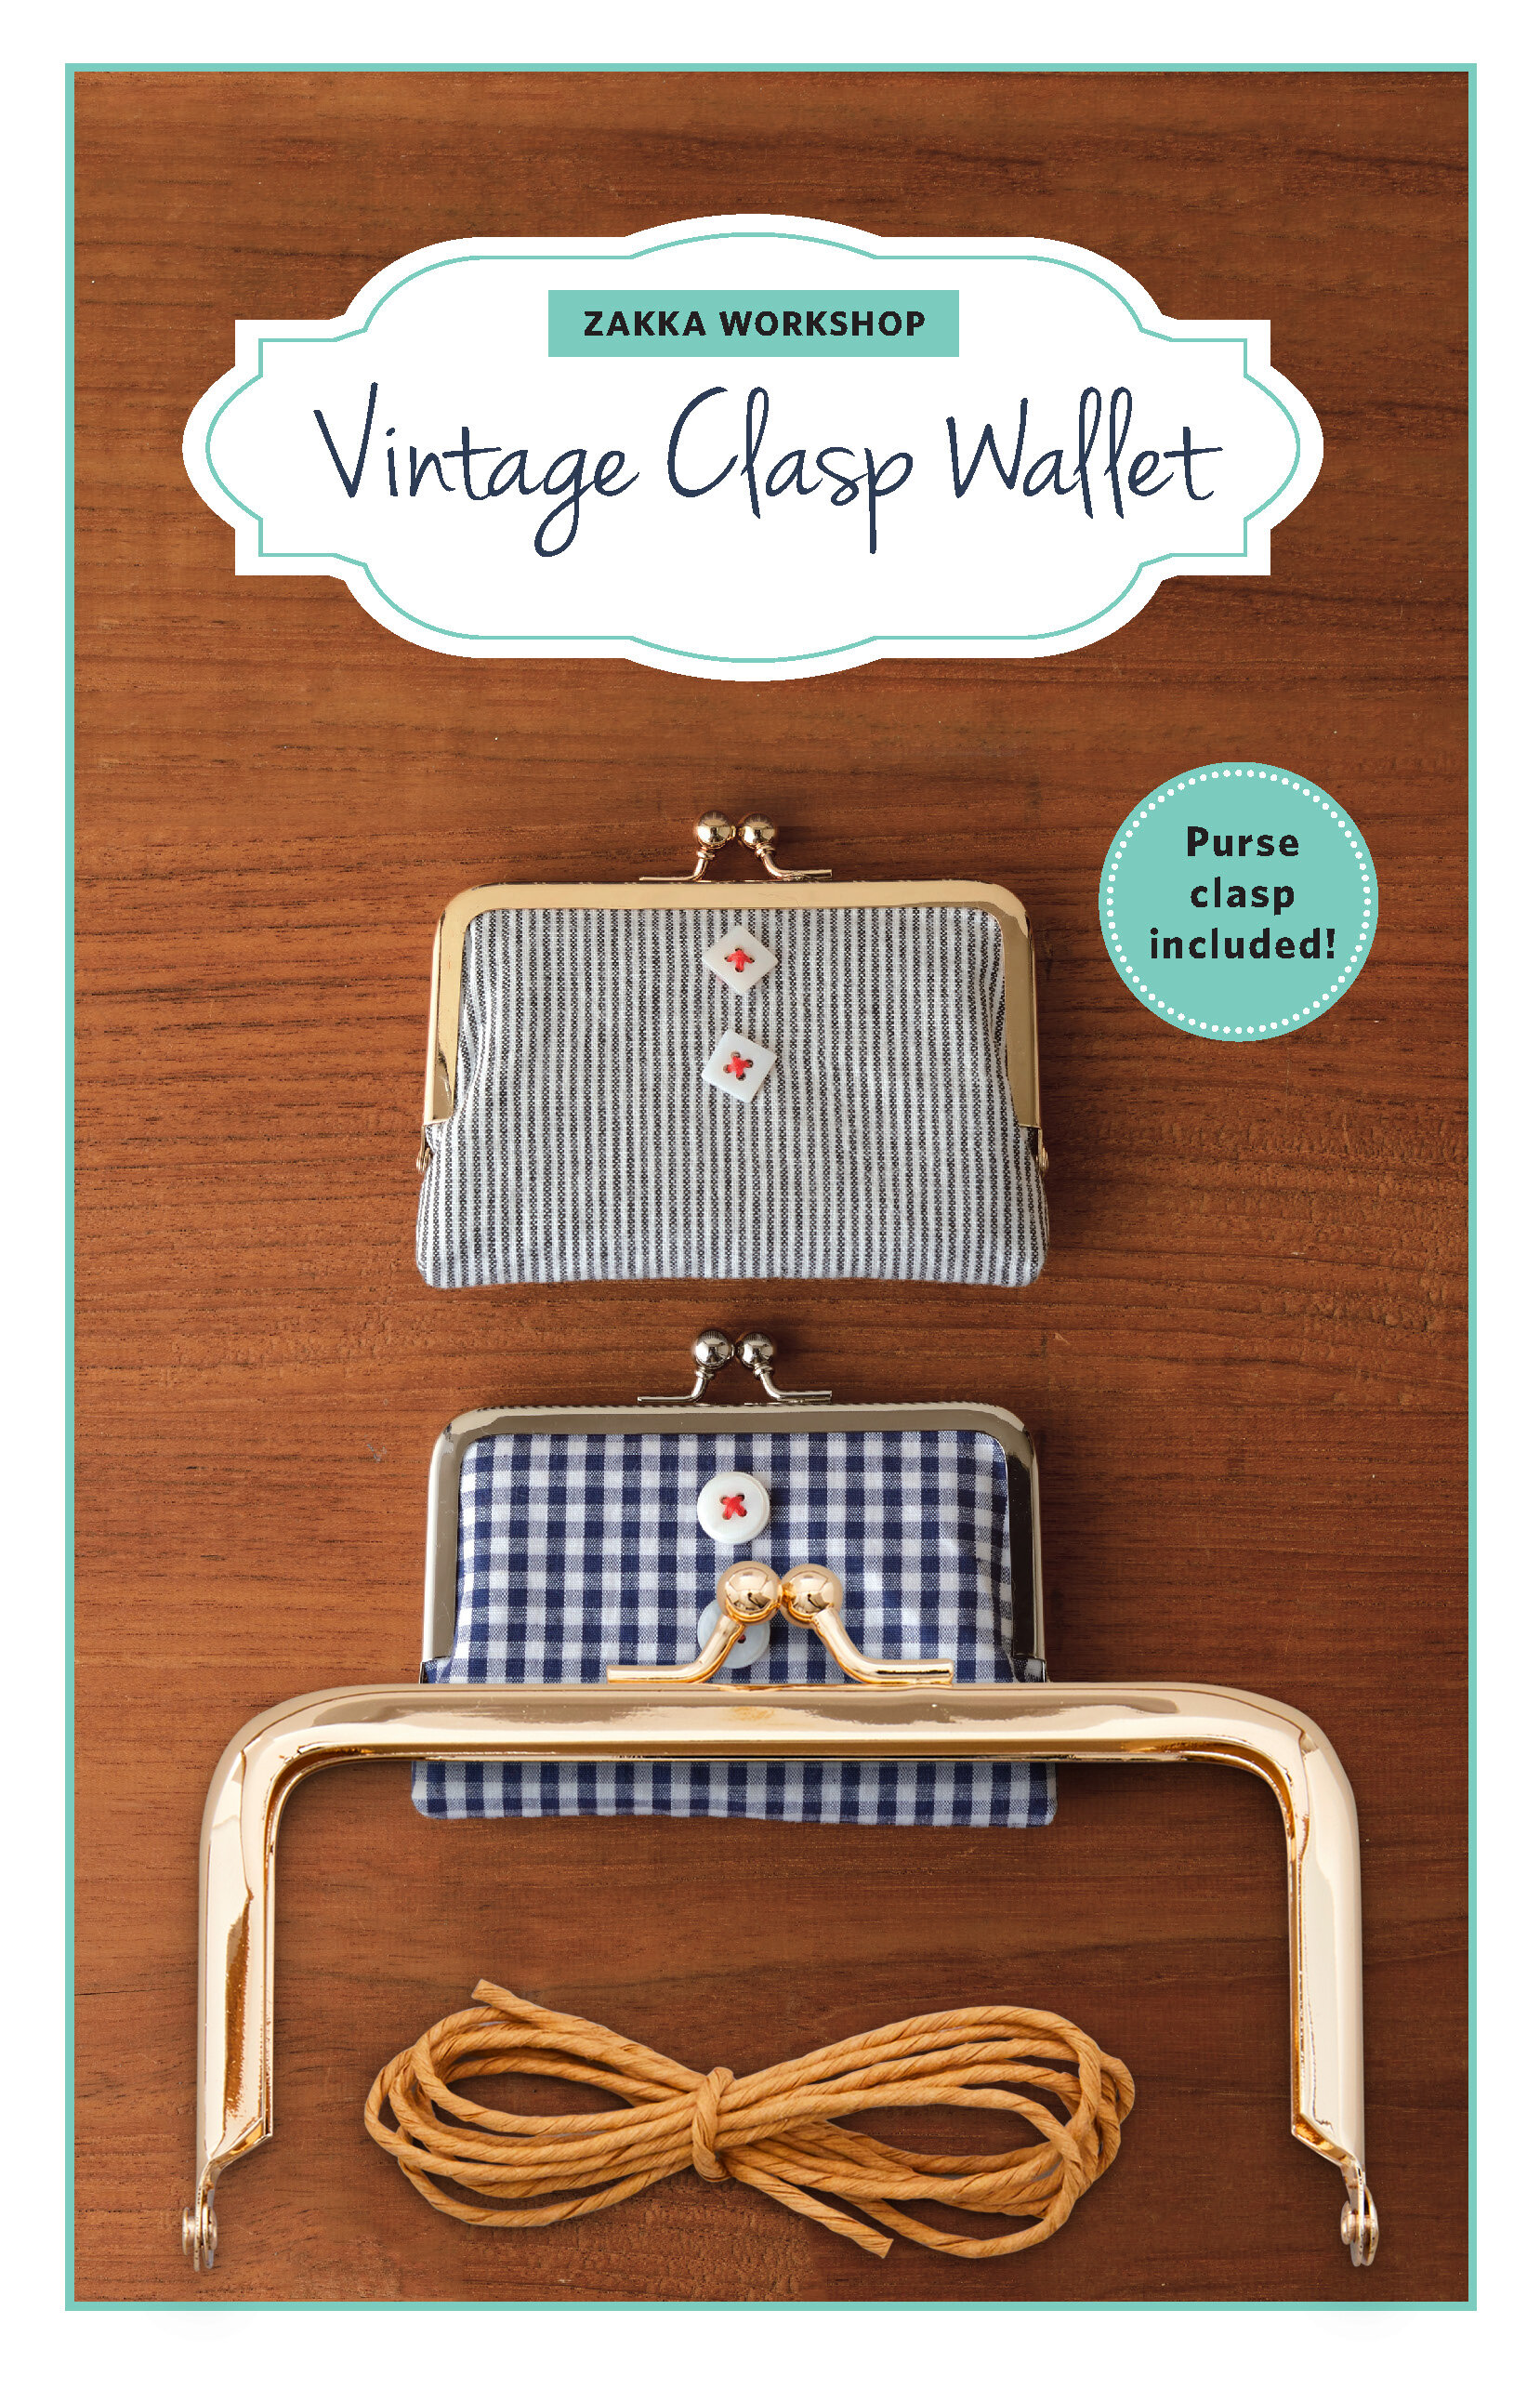 ZW6349 Vintage Clasp Wallet Kit with Rose Gold Clasp — Zakka Workshop